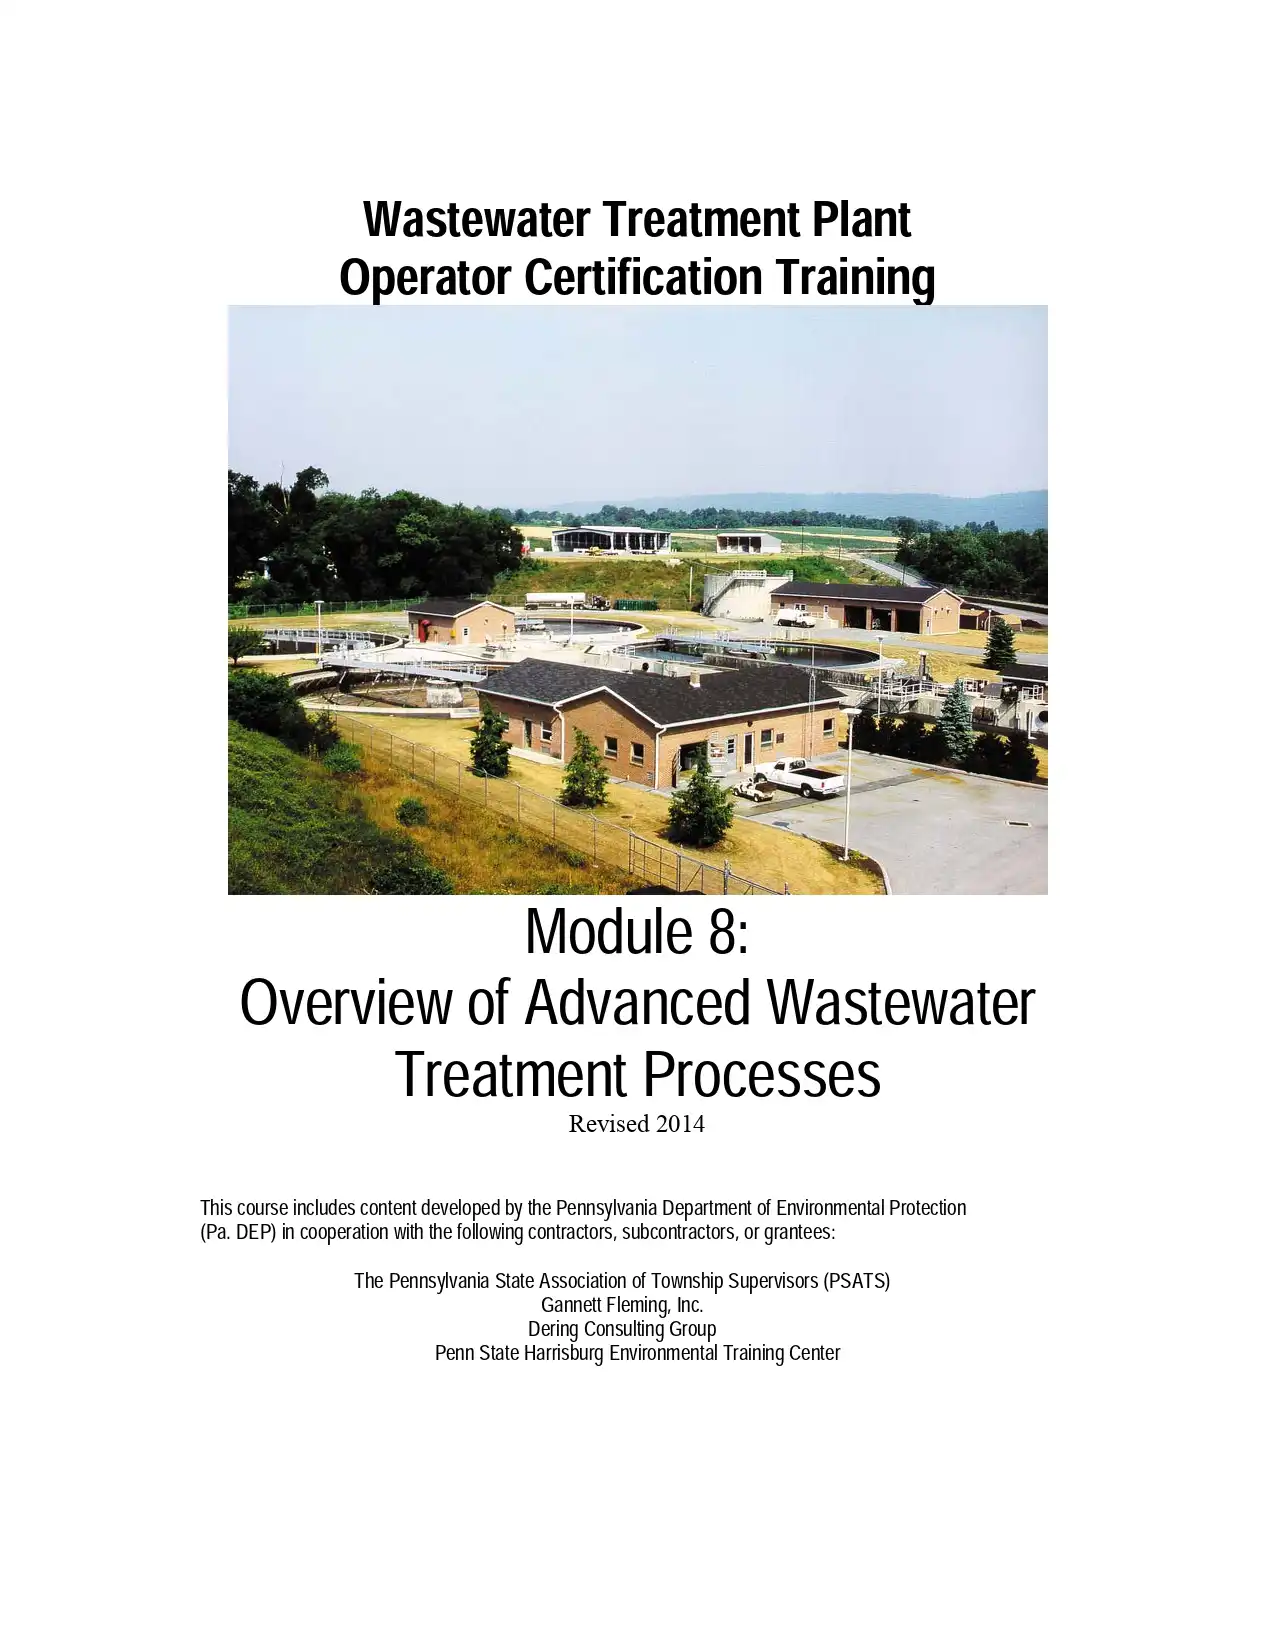 Advanced Wastewater Treatment